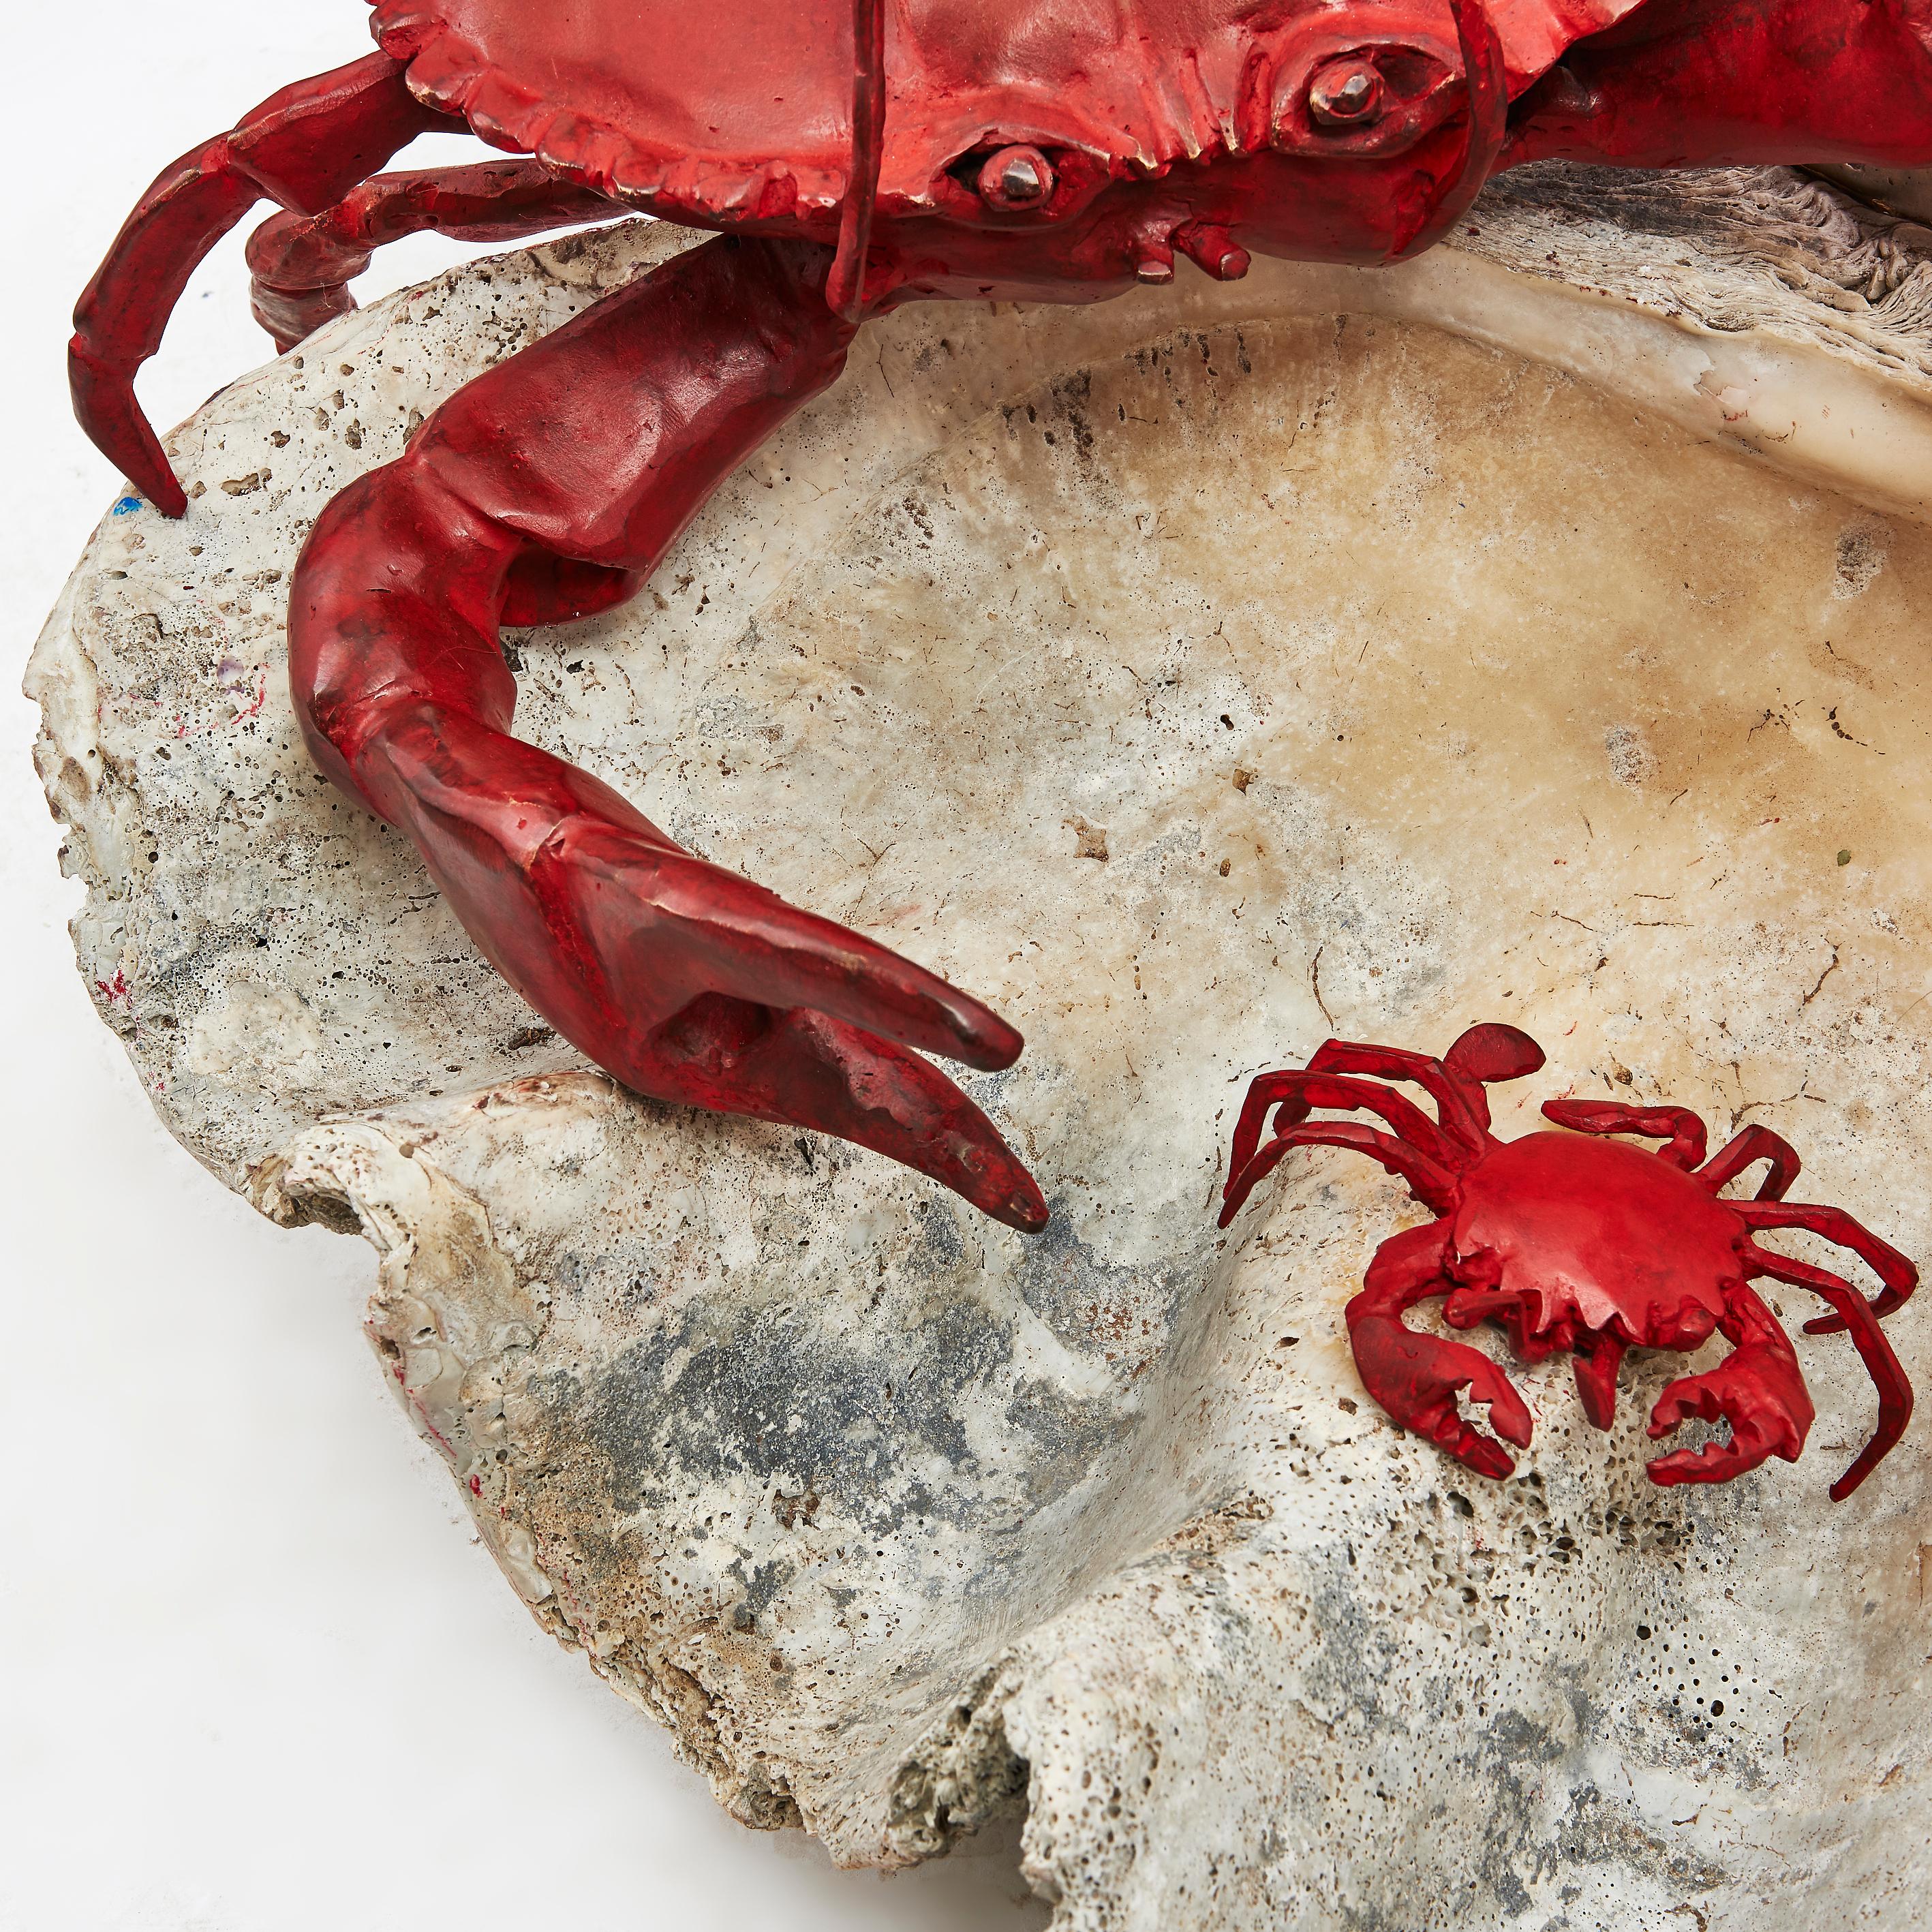 Contemporary Antique Clam Shell Centre Piece with Paula Swinnen Crab Sculptures, 2019. 